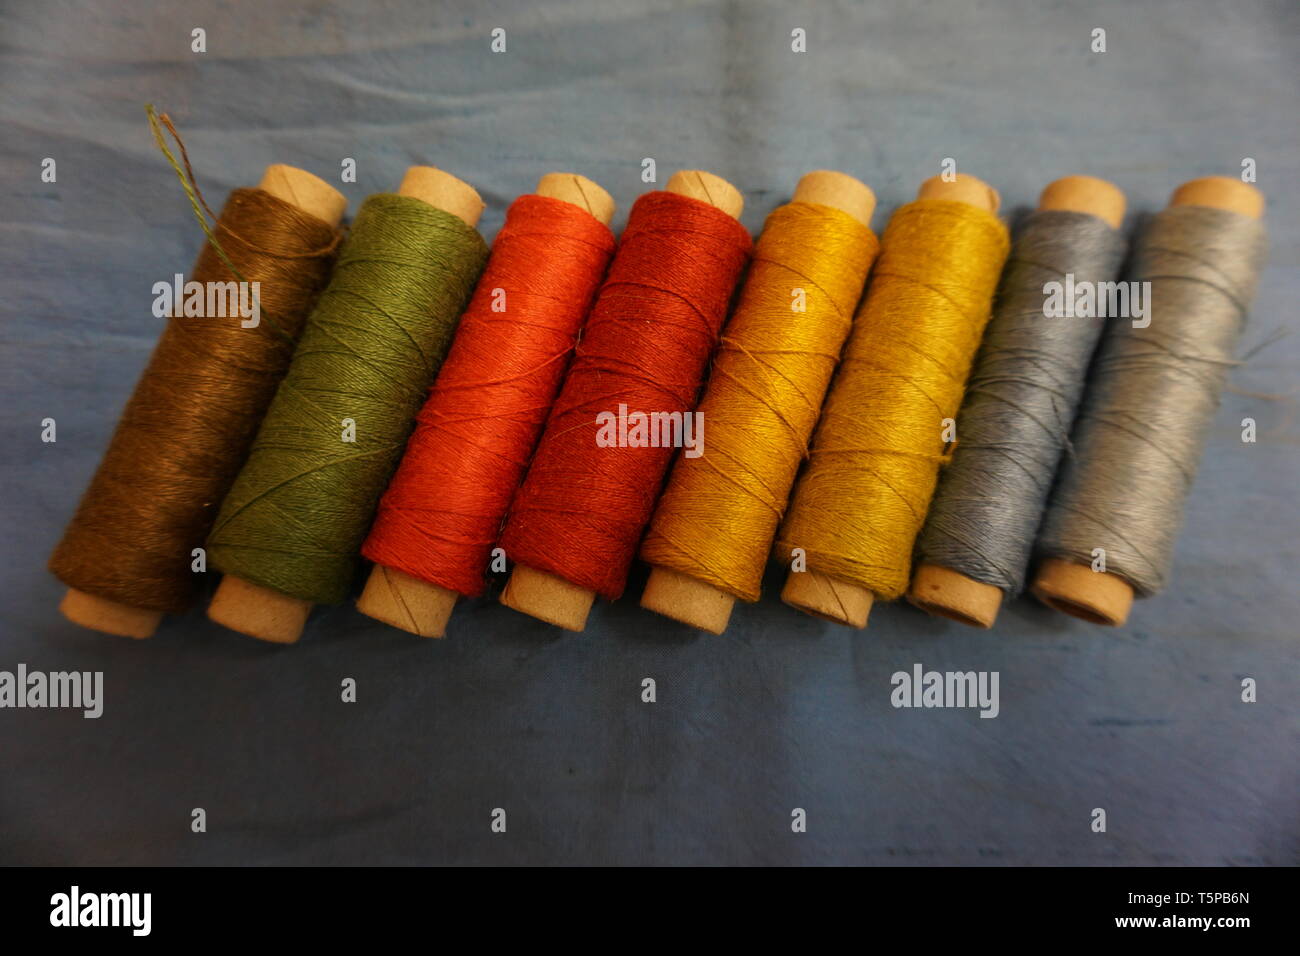 Dyed Linen Thread